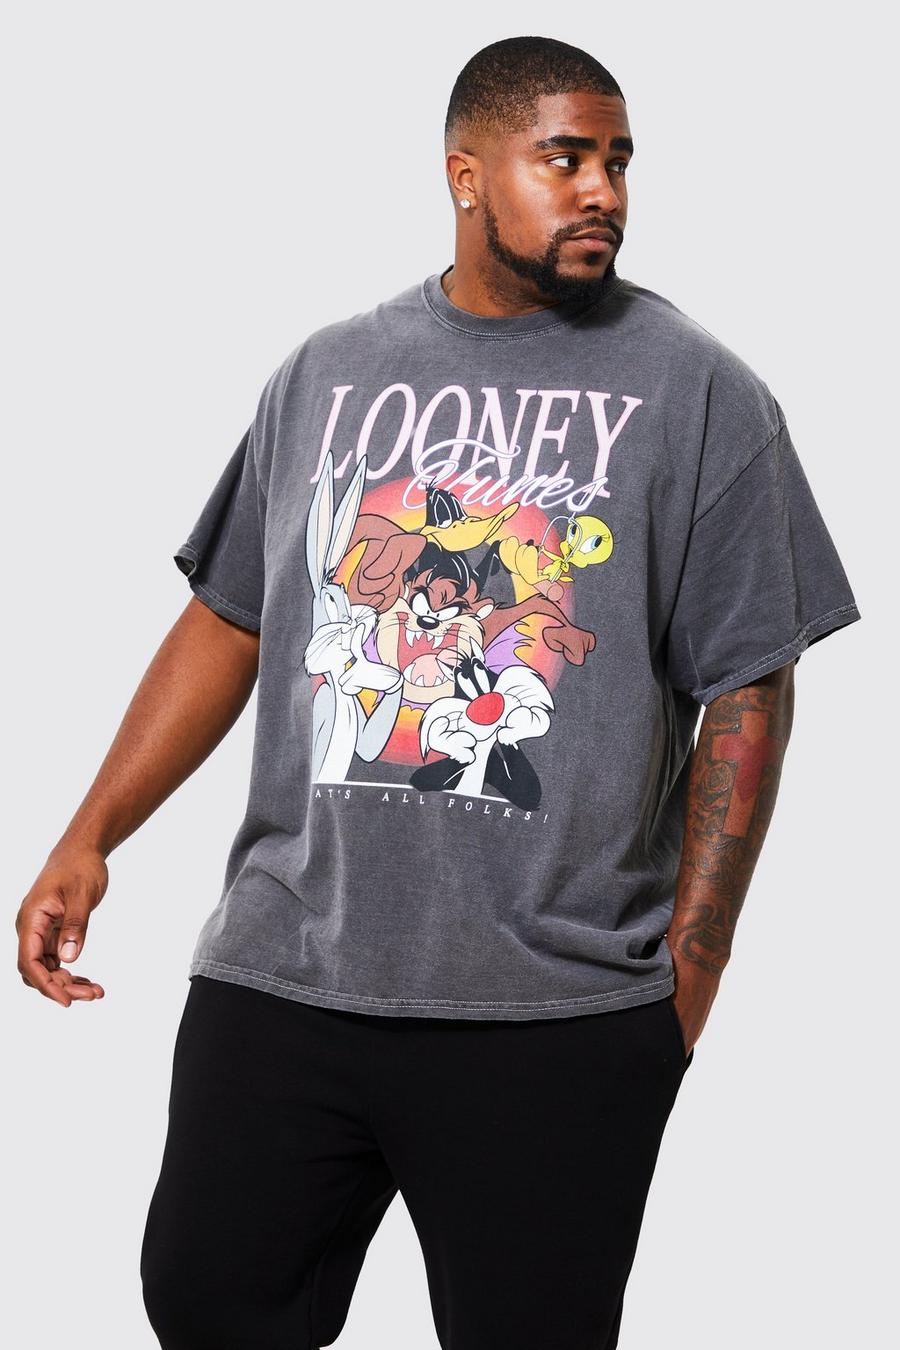 T-shirt Plus Size ufficiale dei Looney Tunes in lavaggio acido, Charcoal gris